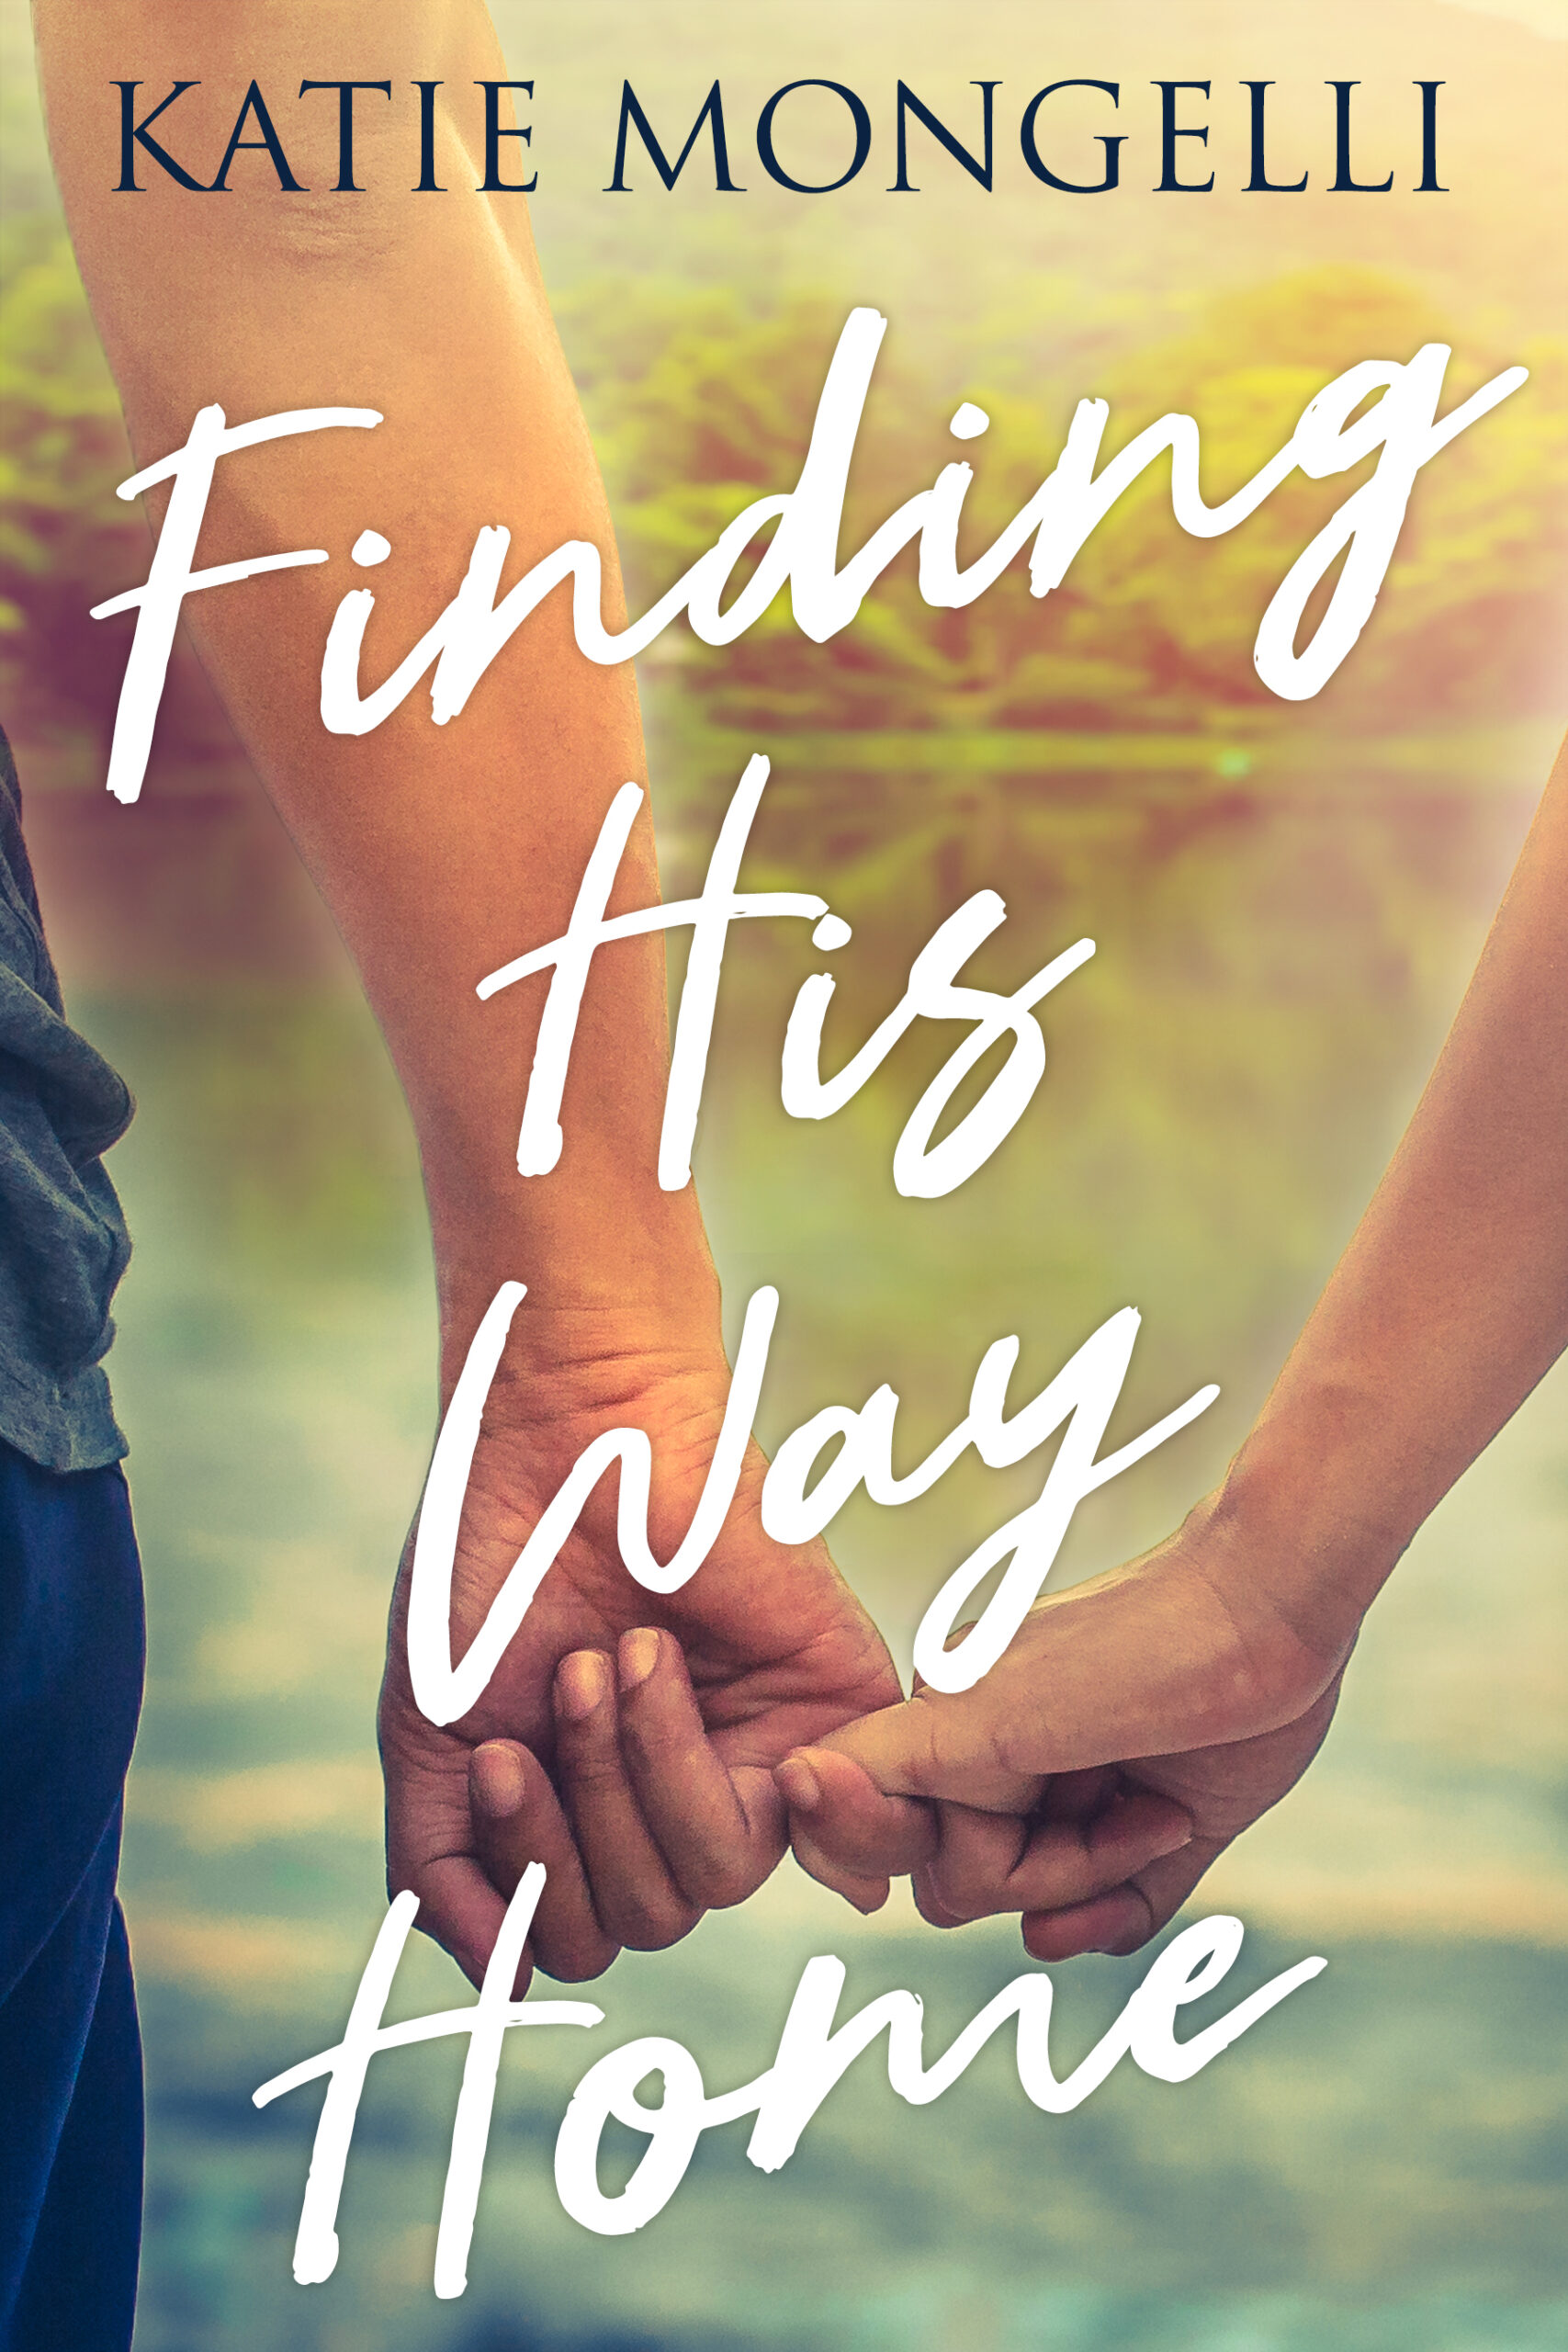 Finding His Way Home by Katie Mongelli